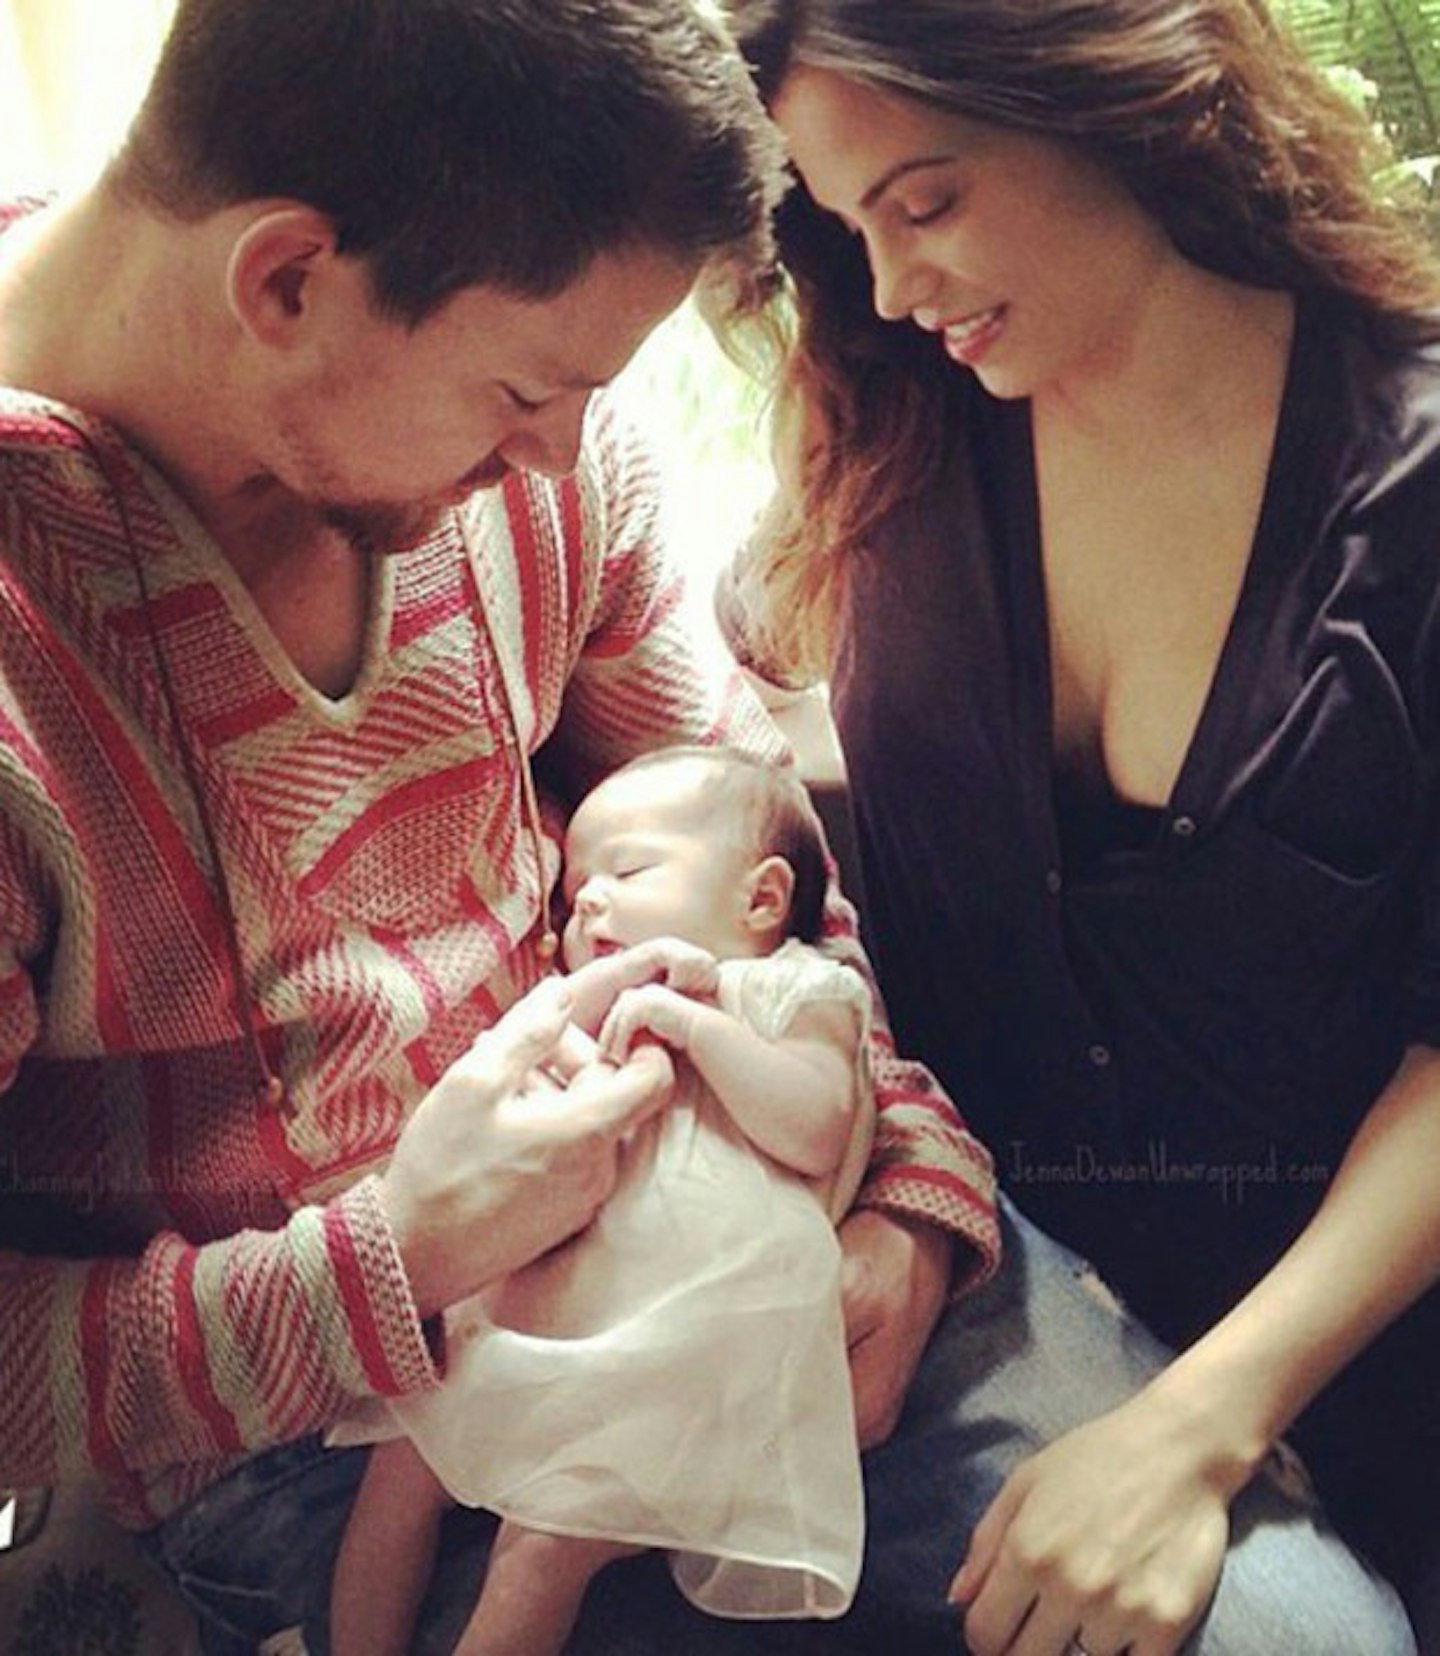 May 2013: Channing Tatum and Jenna Dewan-Tatum welcomed daughter Everly